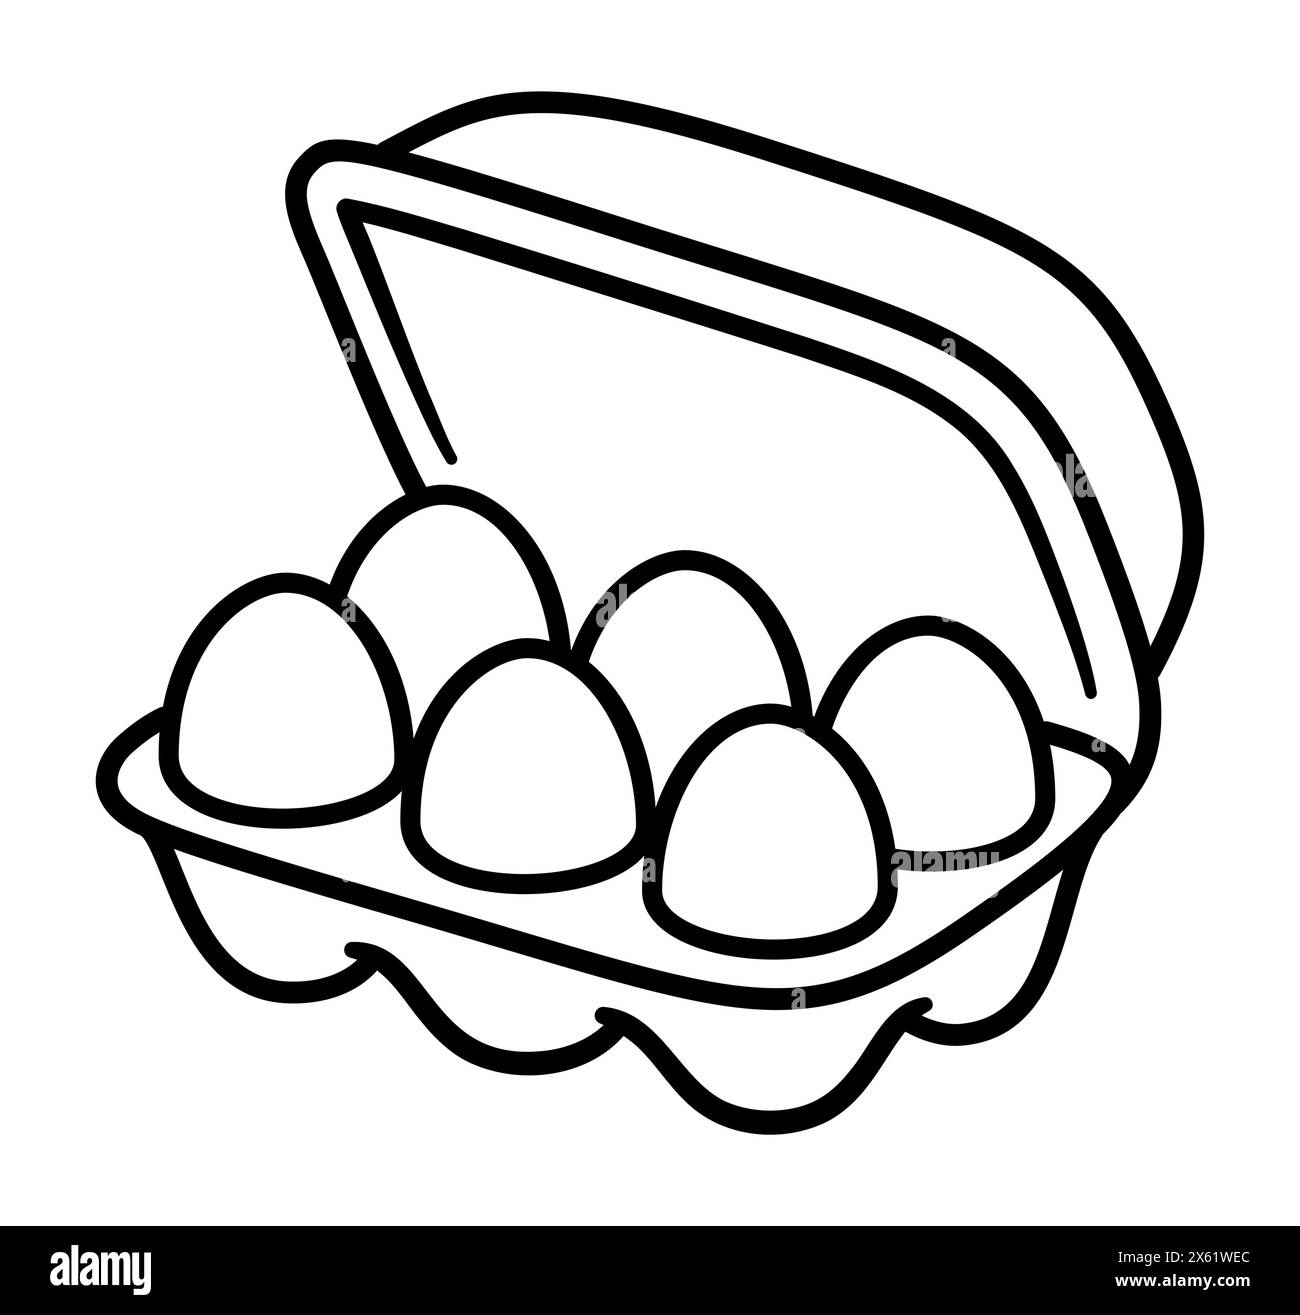 Hand drawn egg carton doodle line icon. Half dozen eggs container. Simple cartoon drawing, vector clip art illustration. Stock Vector